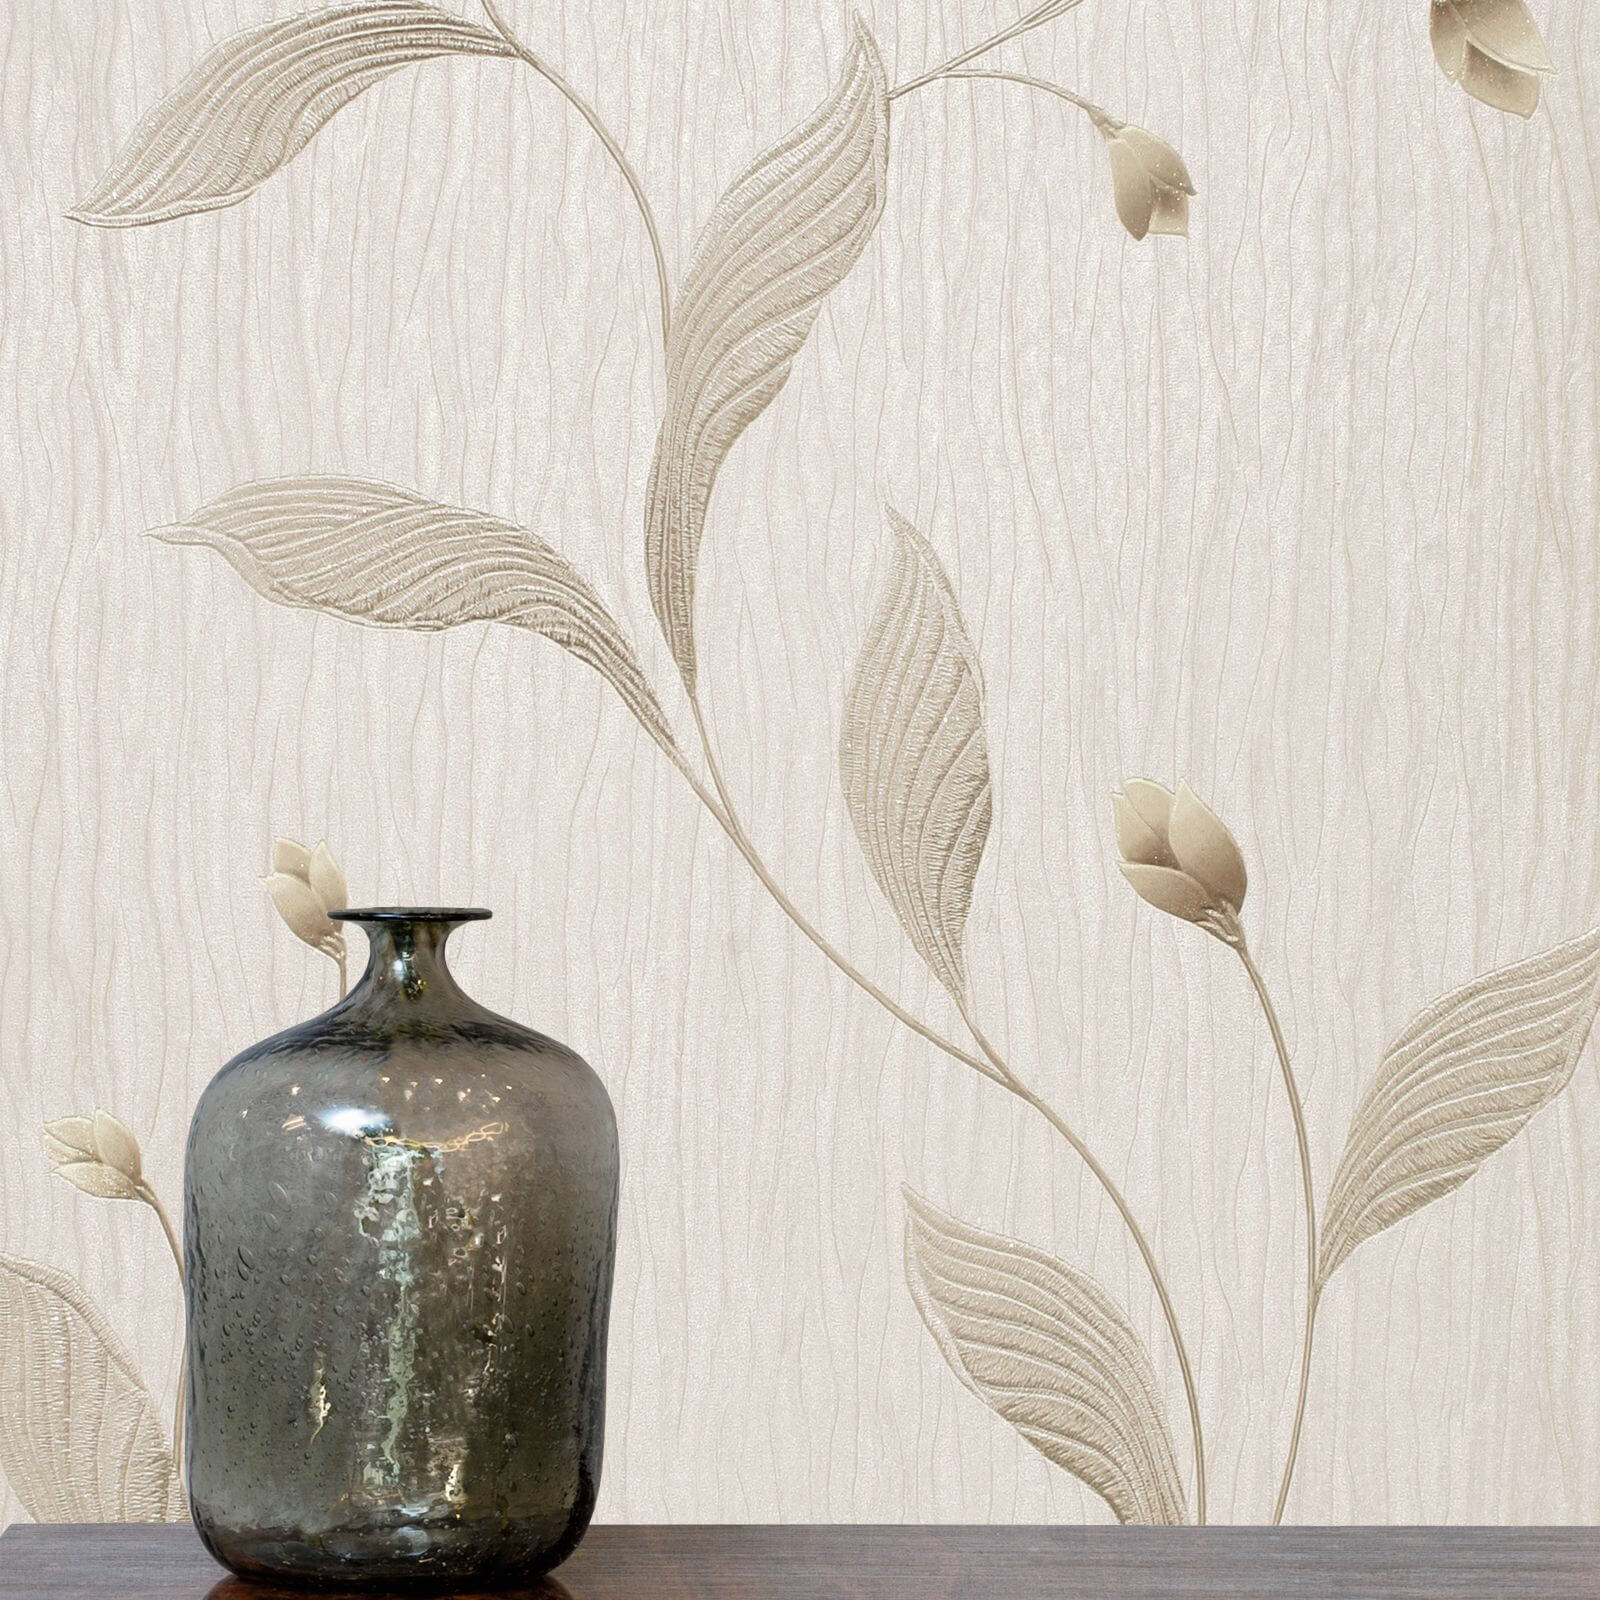 Belgravia Decor Tiffany Floral Textured Metallic Cream Wallpaper Homebase